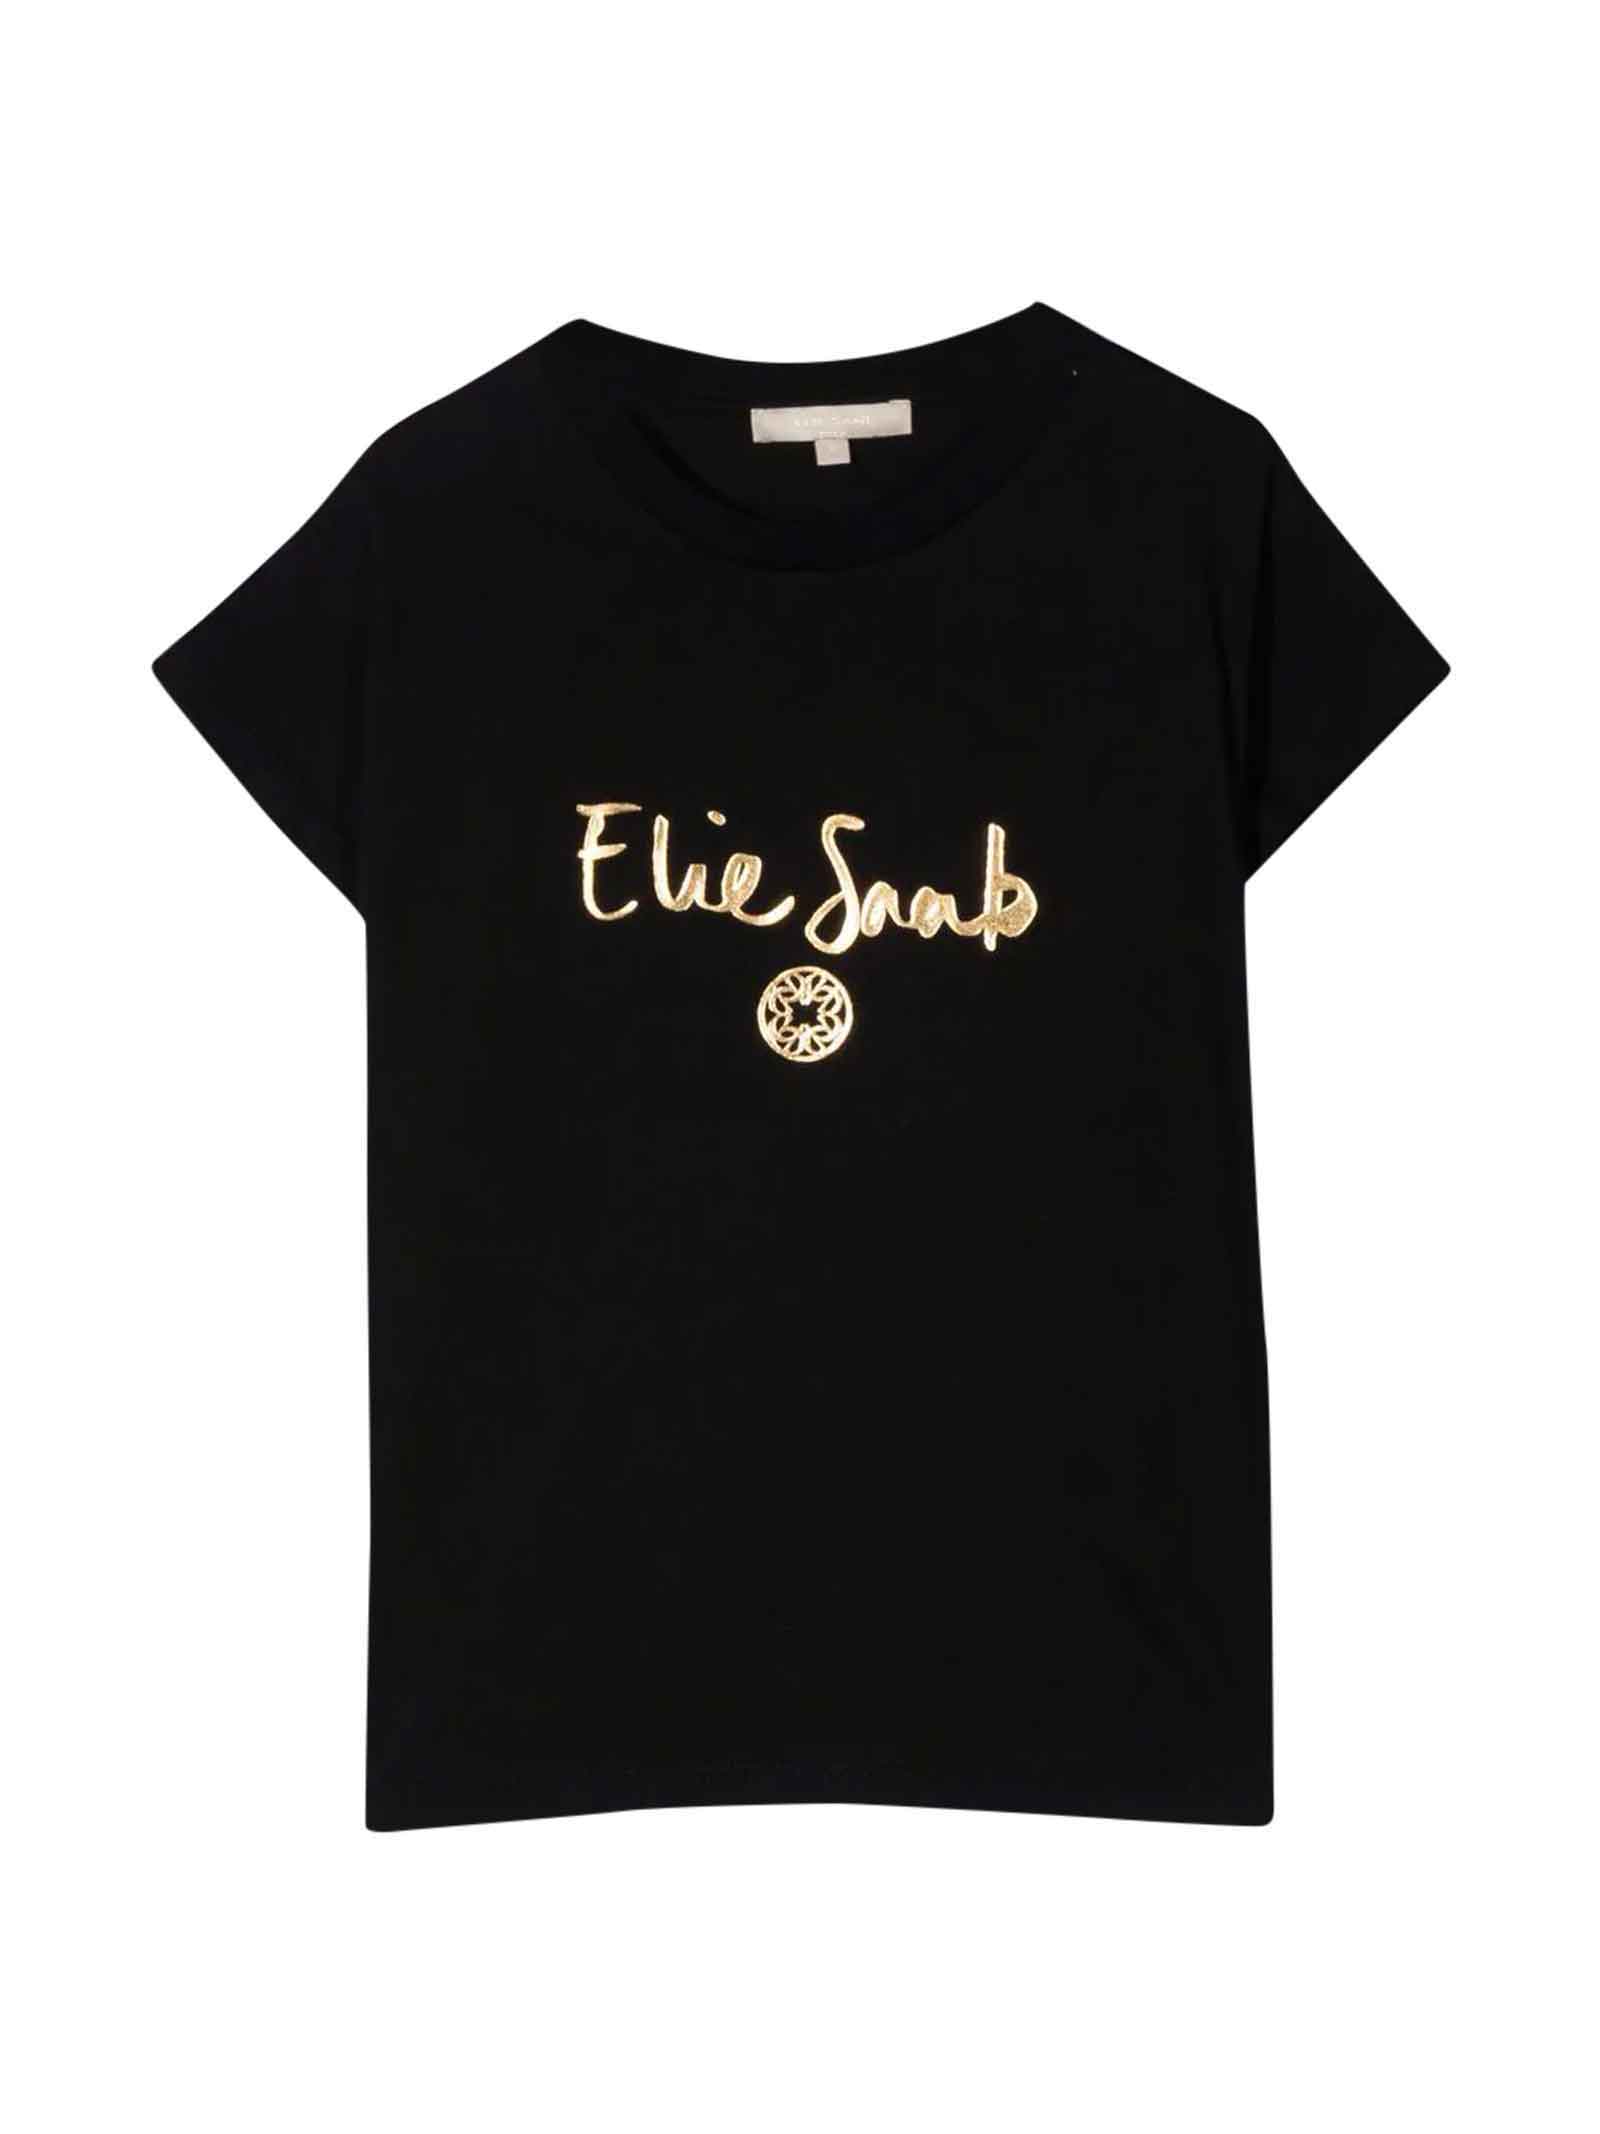 Elie Saab Black Teen T-shirt